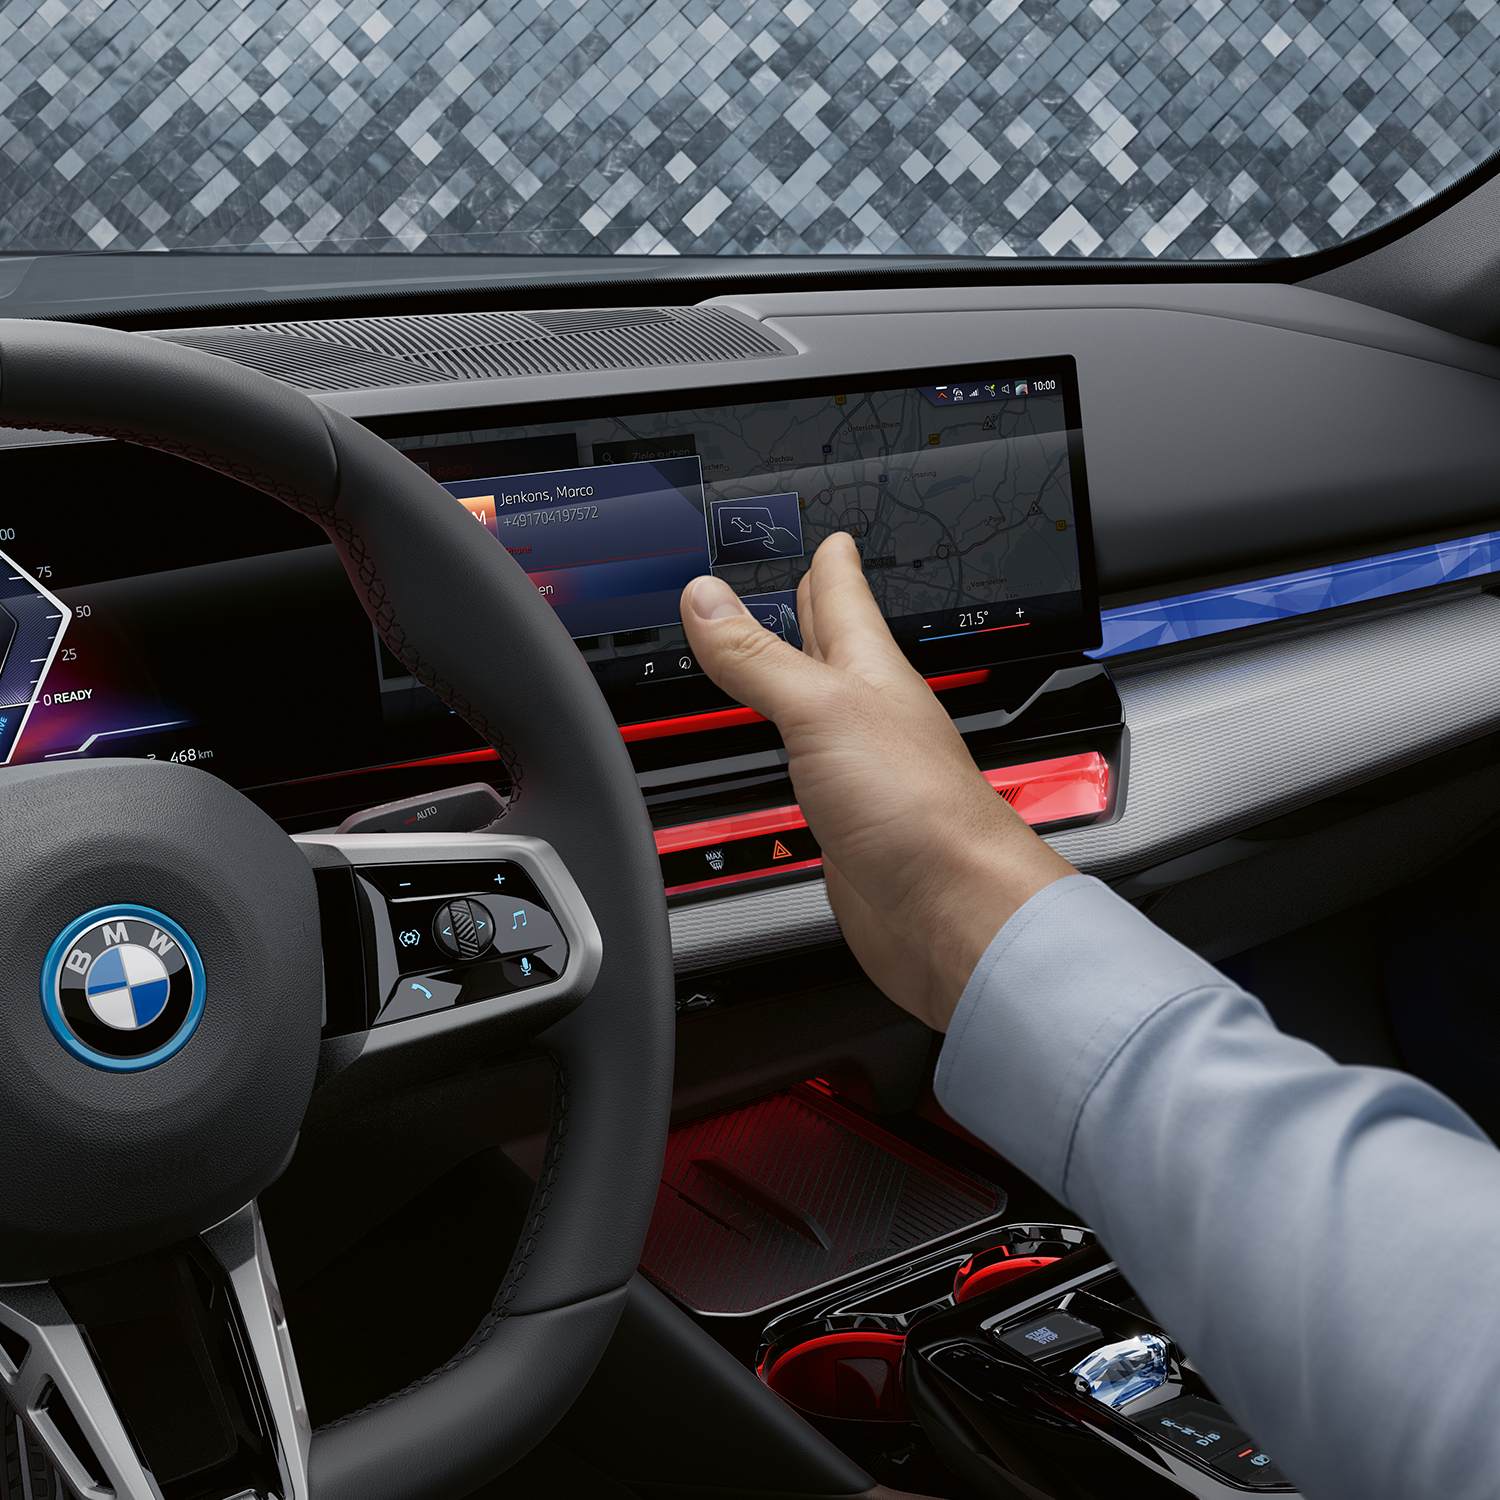 BMW Operating System 8.5.